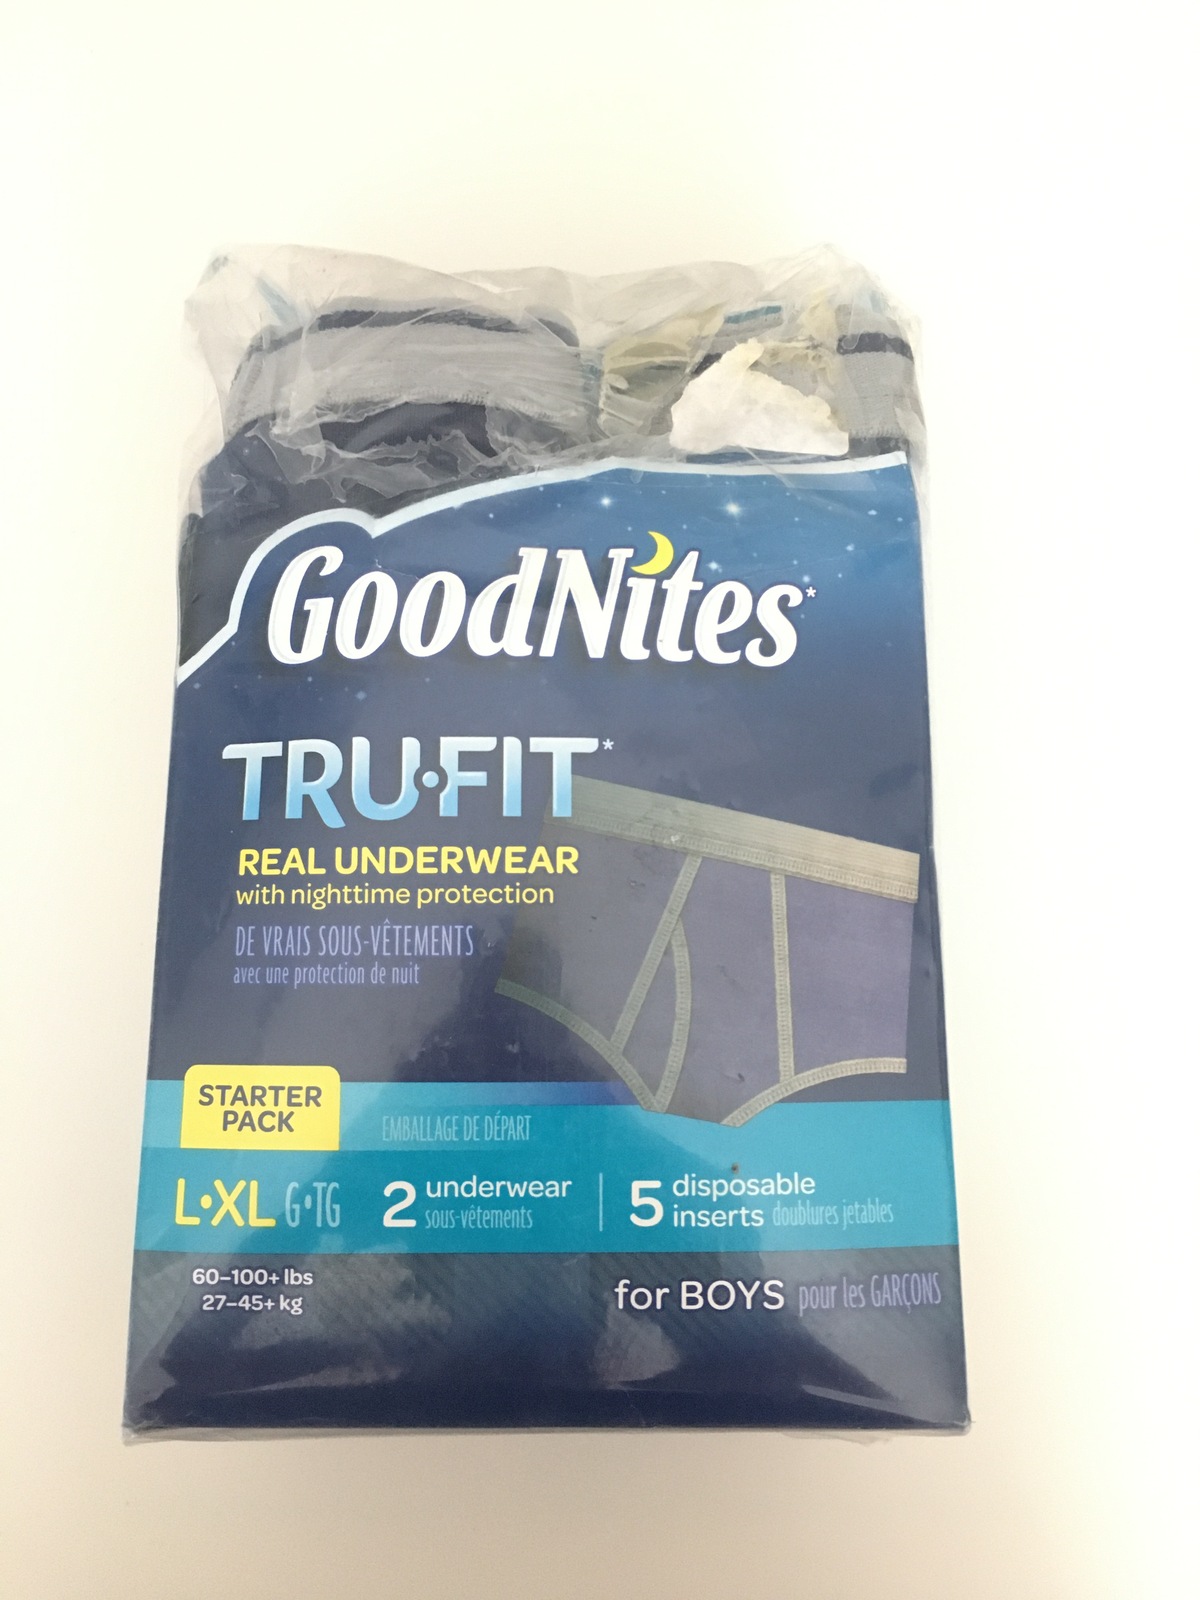 Goodnites trufit real underwear starter pack l/xl - $29.99